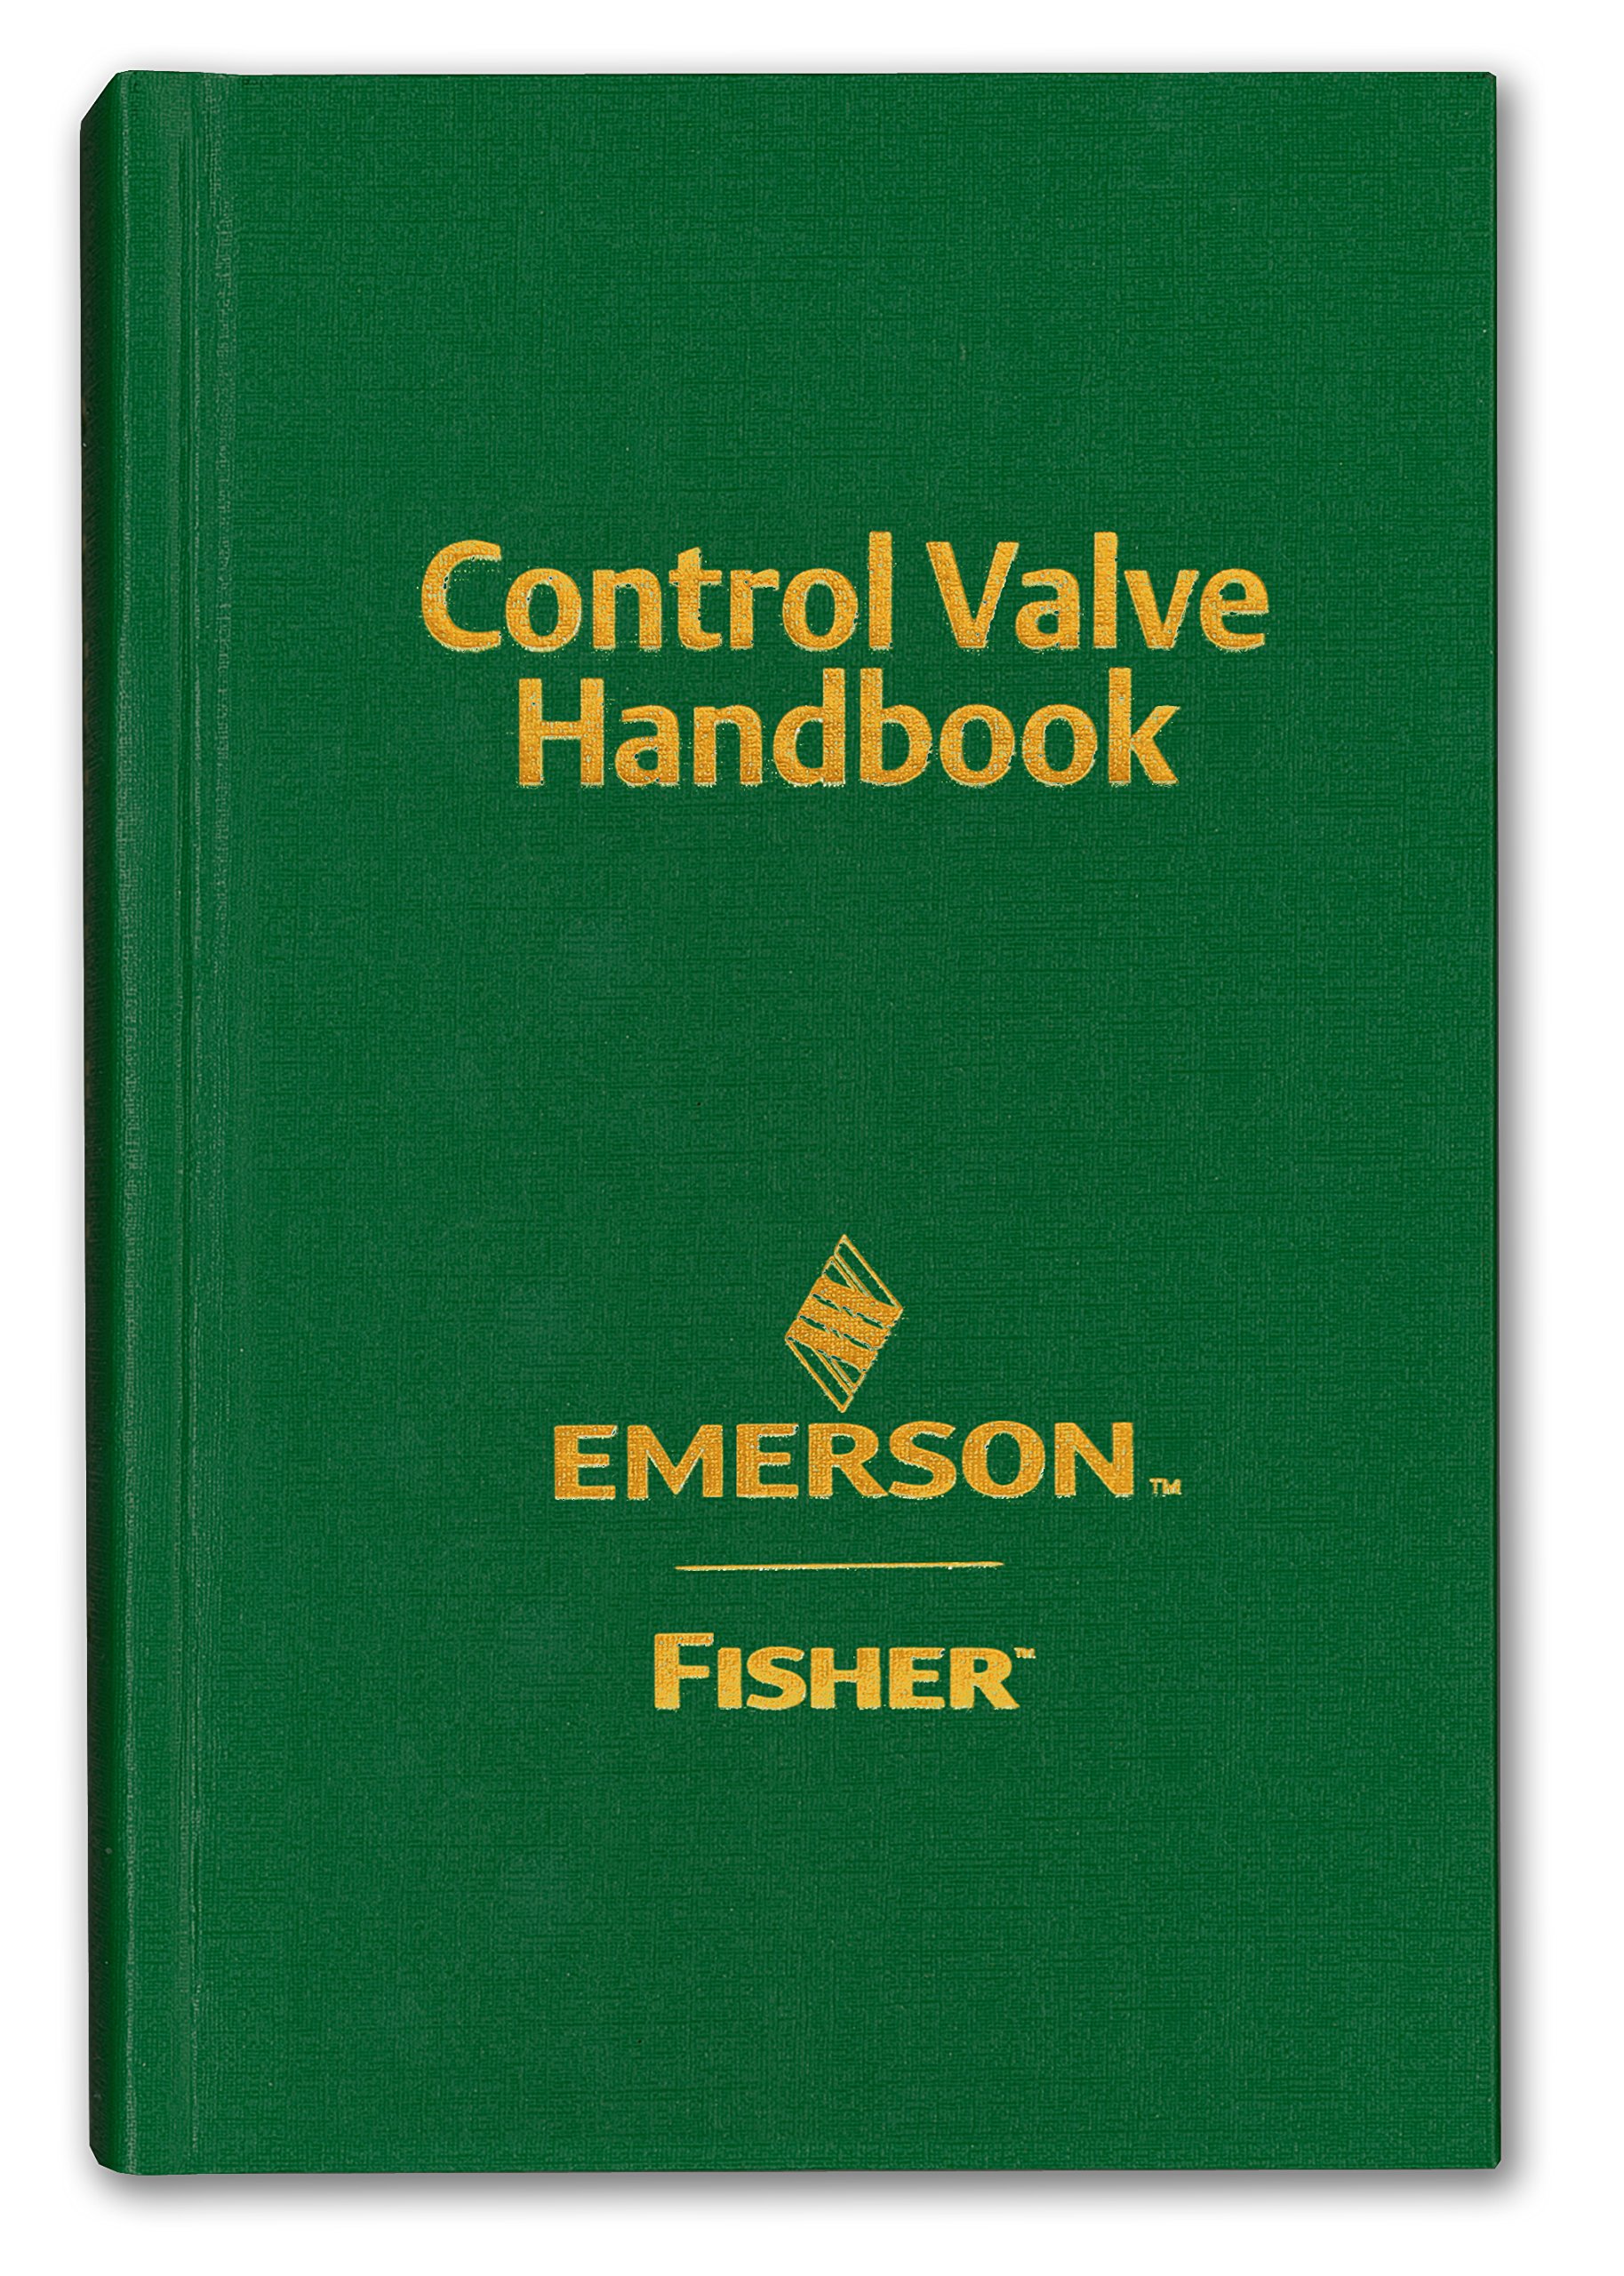 Control Valve Handbook PDF